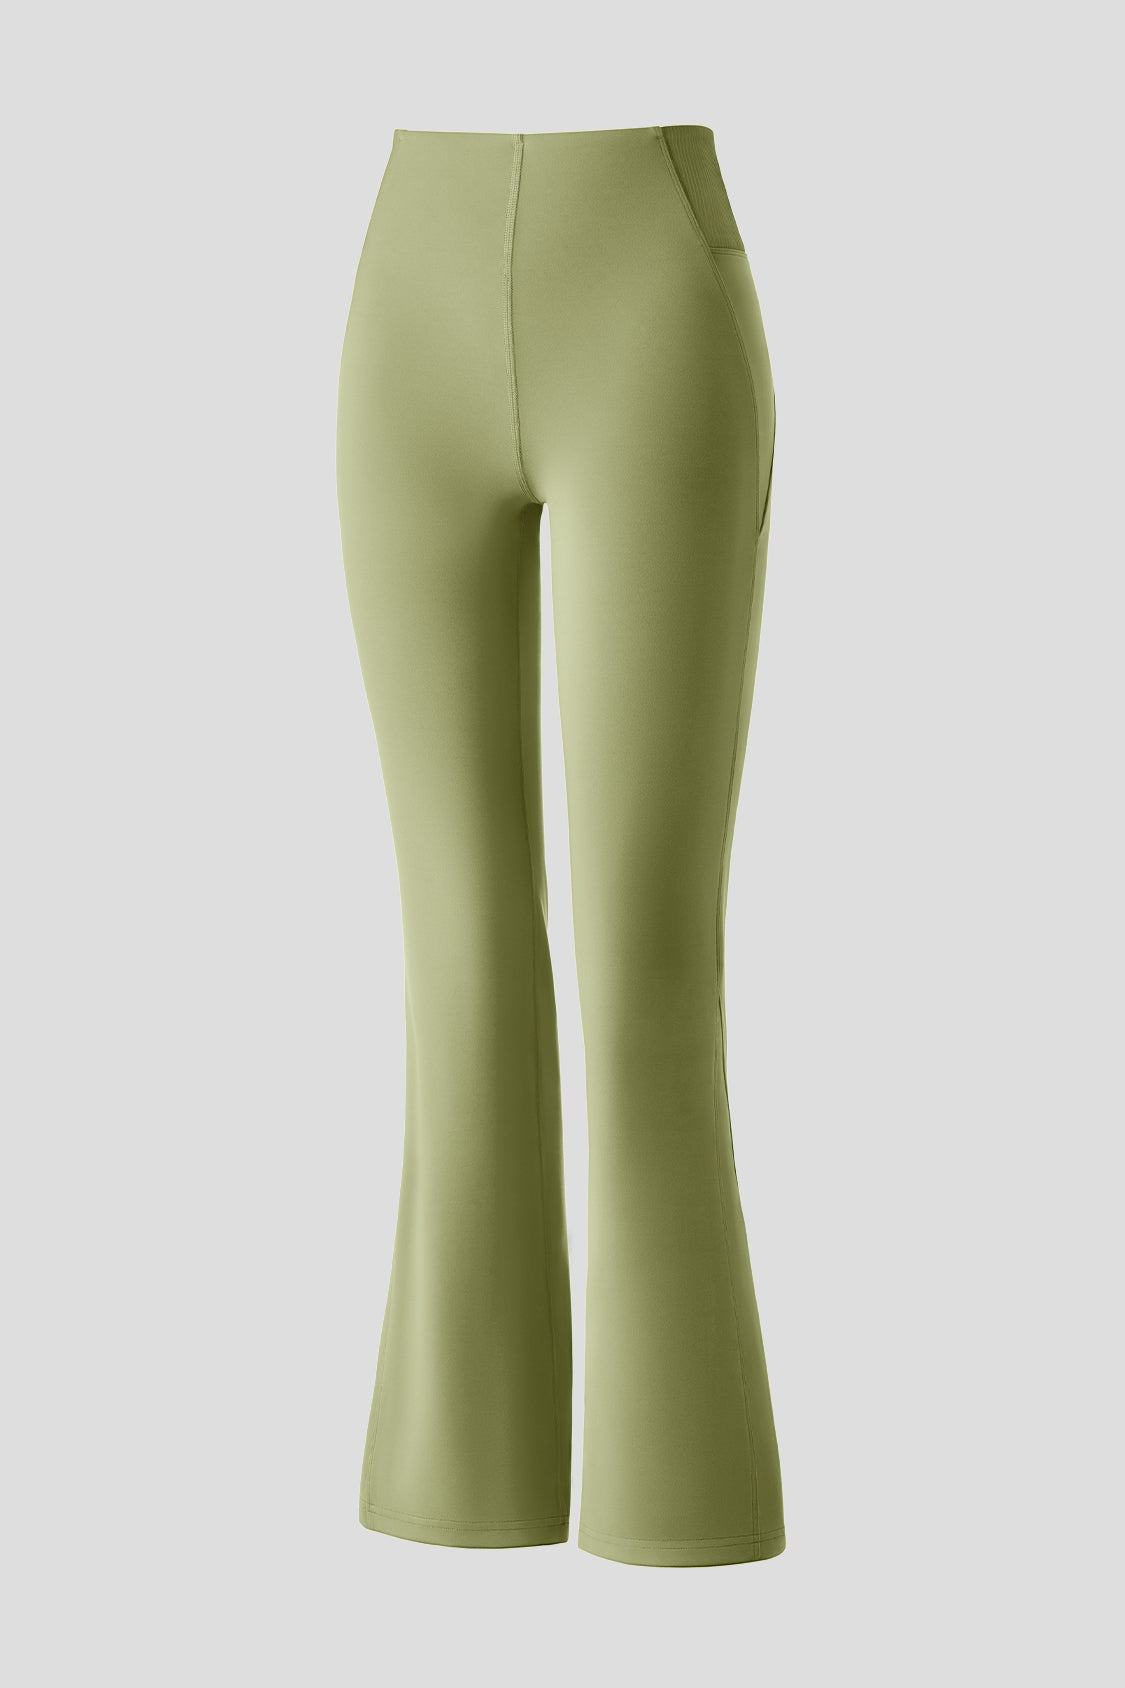 beneunder women's sun protection pants #color_wild meadow green